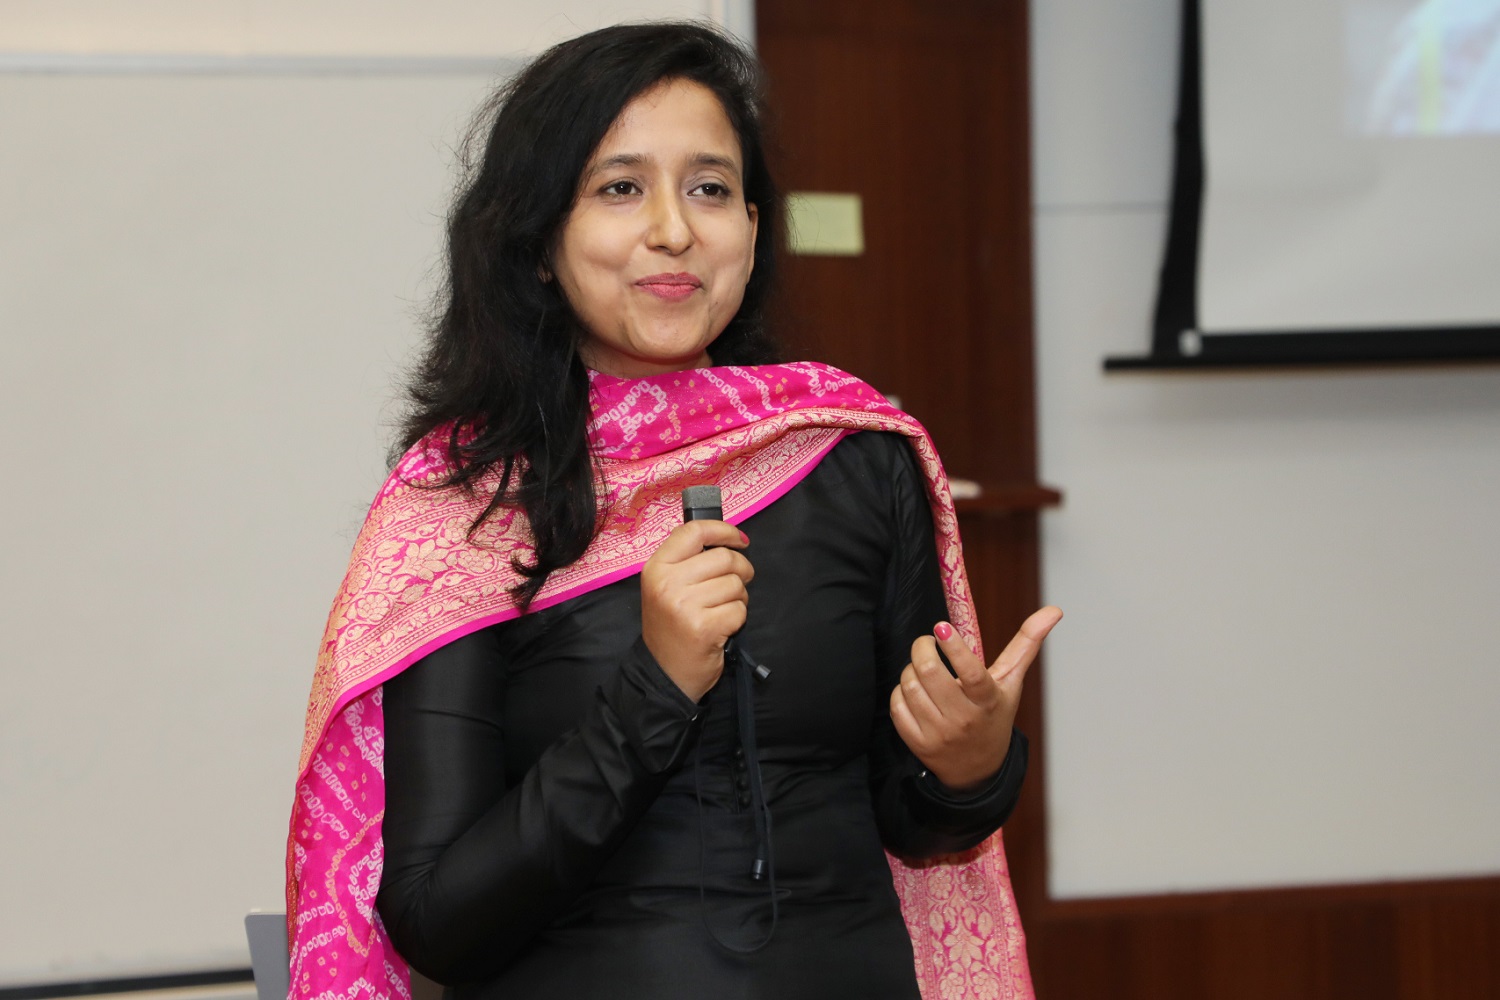 Aparana Gupta, AI & Data Science Leader Director, Microsoft, spoke on 'Generative AI - The promises and perils' at WiDS Bengaluru Conference.